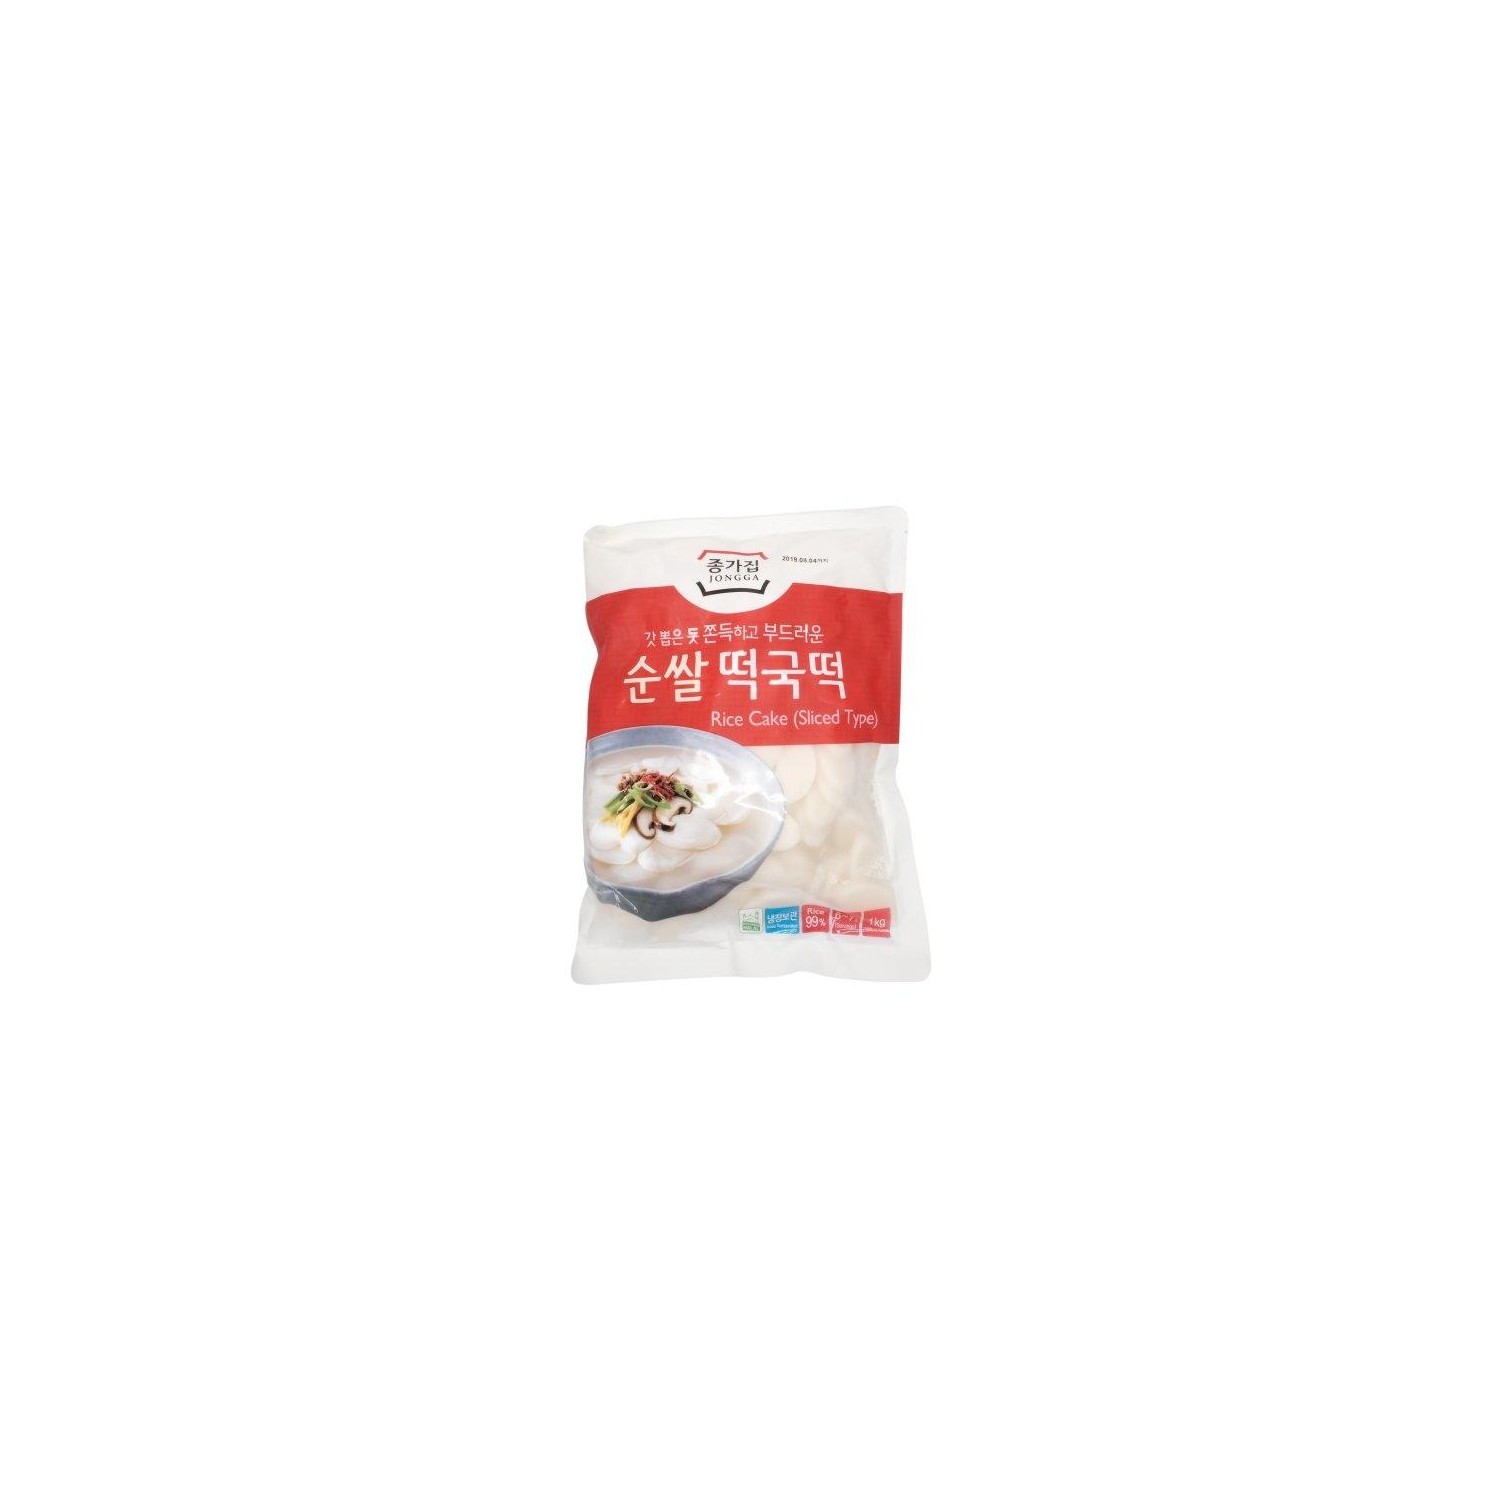 Rice cake (Sliced Type) - 8801024944552